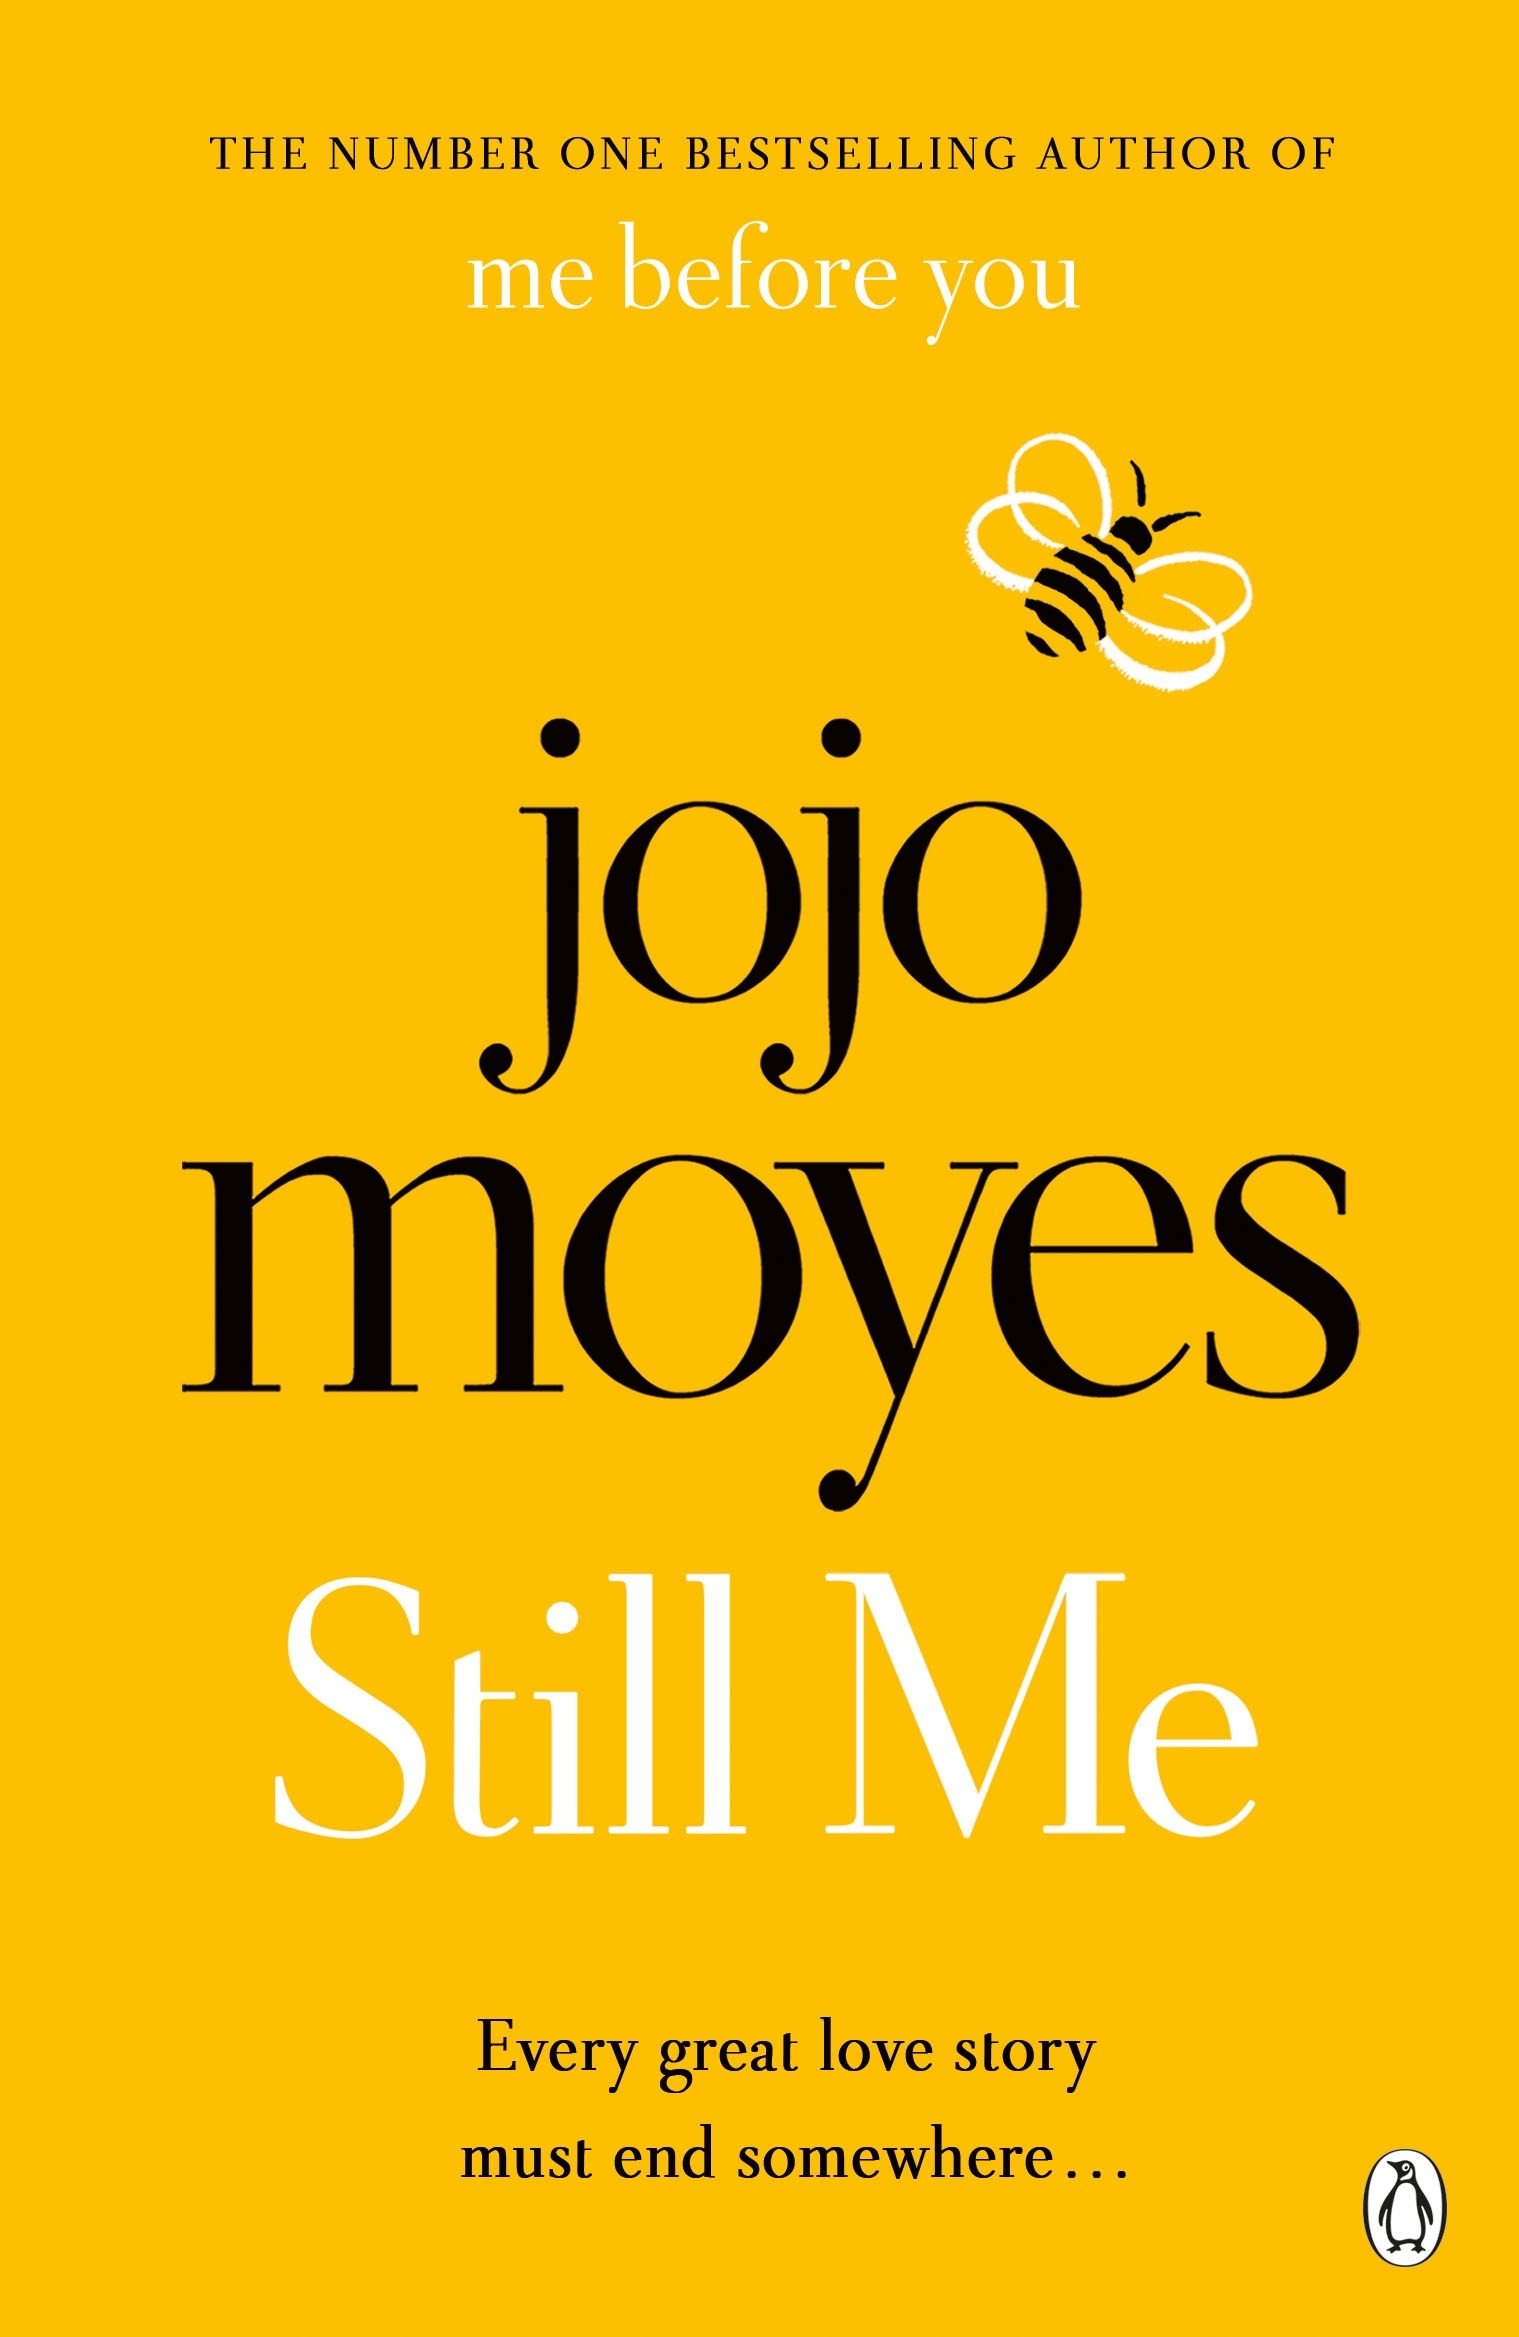 Book “Still Me” by Jojo Moyes — February 7, 2019